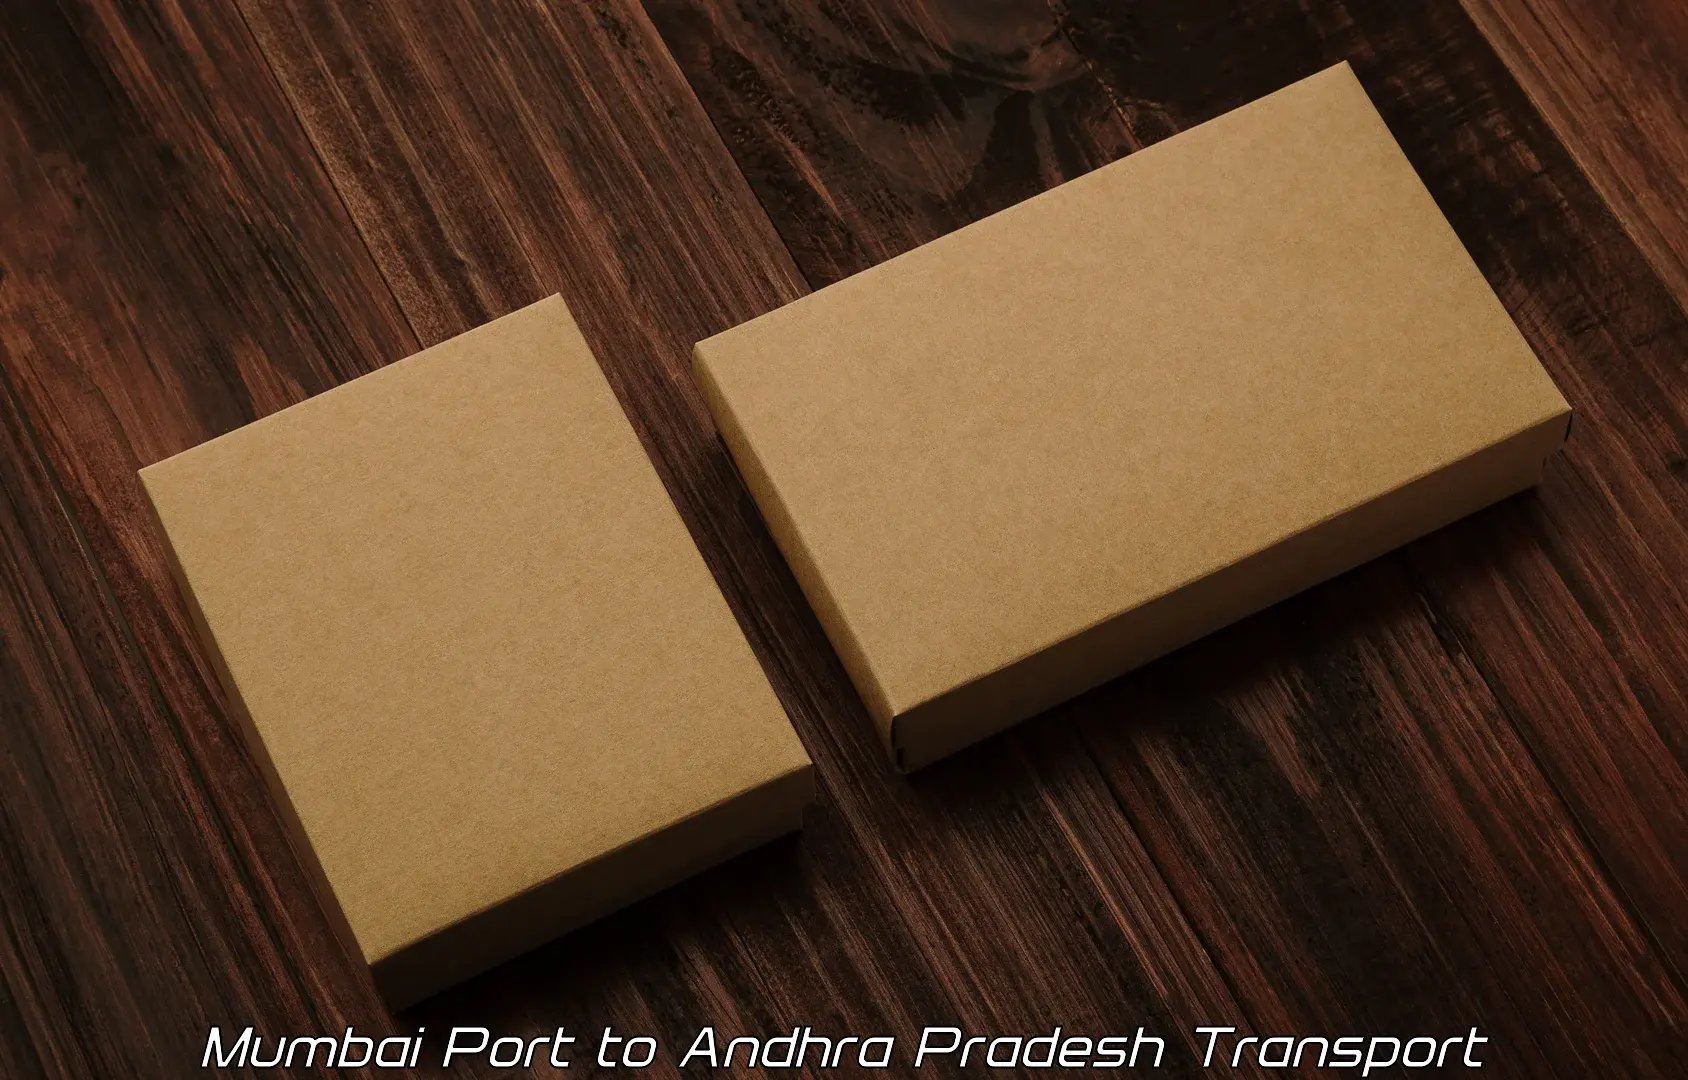 Package delivery services Mumbai Port to Gajapathinagaram